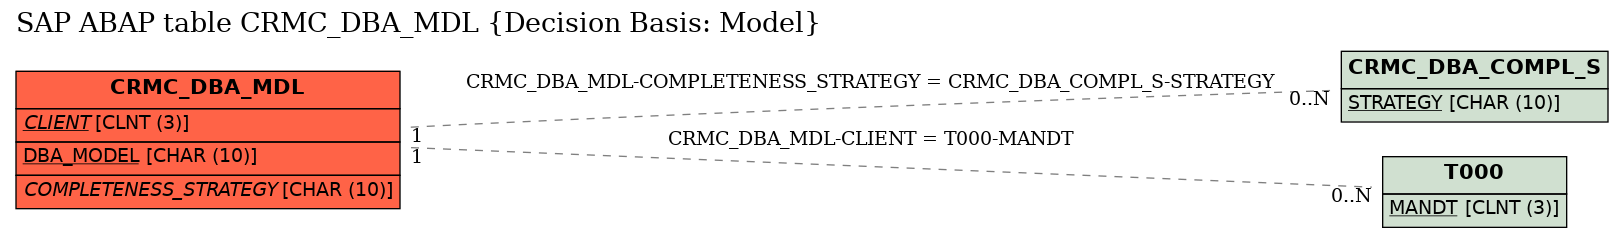 E-R Diagram for table CRMC_DBA_MDL (Decision Basis: Model)